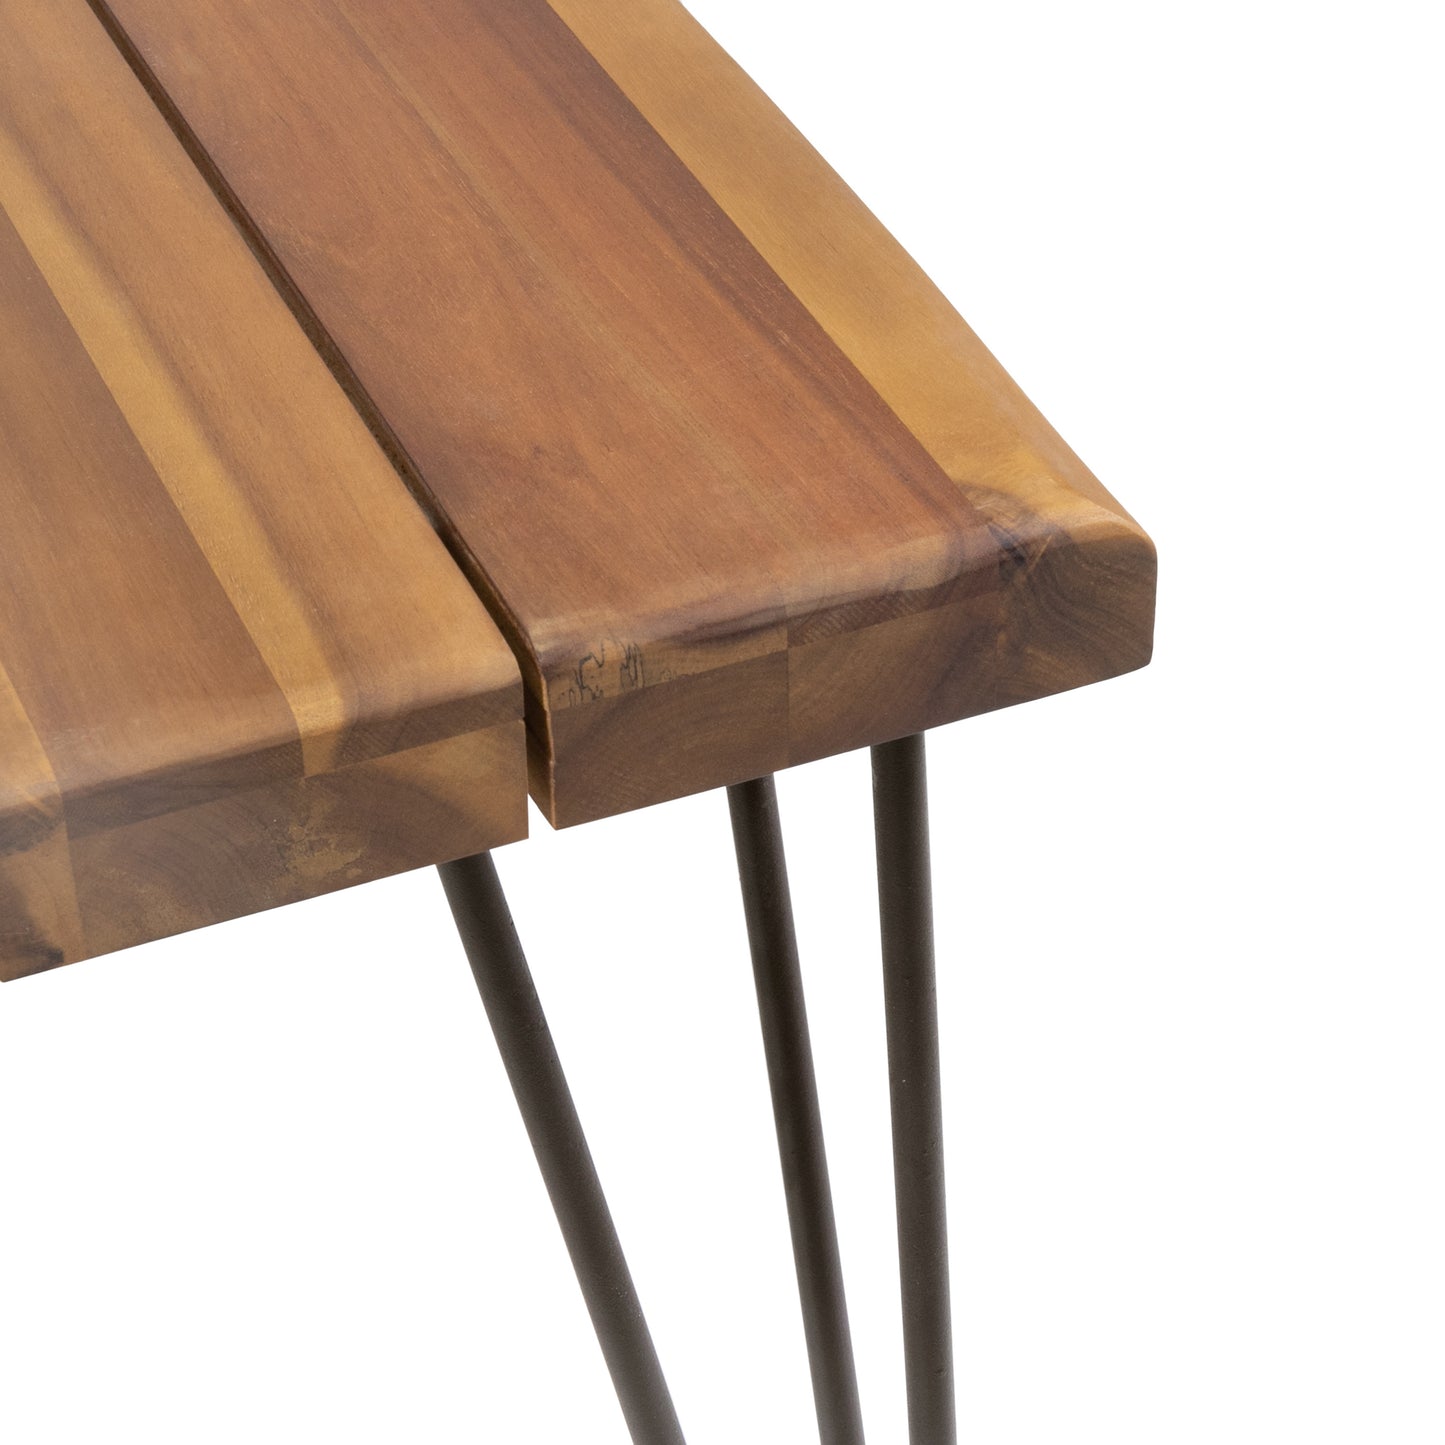 Kama Patio Dining Table, Rectangular, 72", Acacia Wood Table Top, Rustic Iron Hairpin Legs, Teak Finish